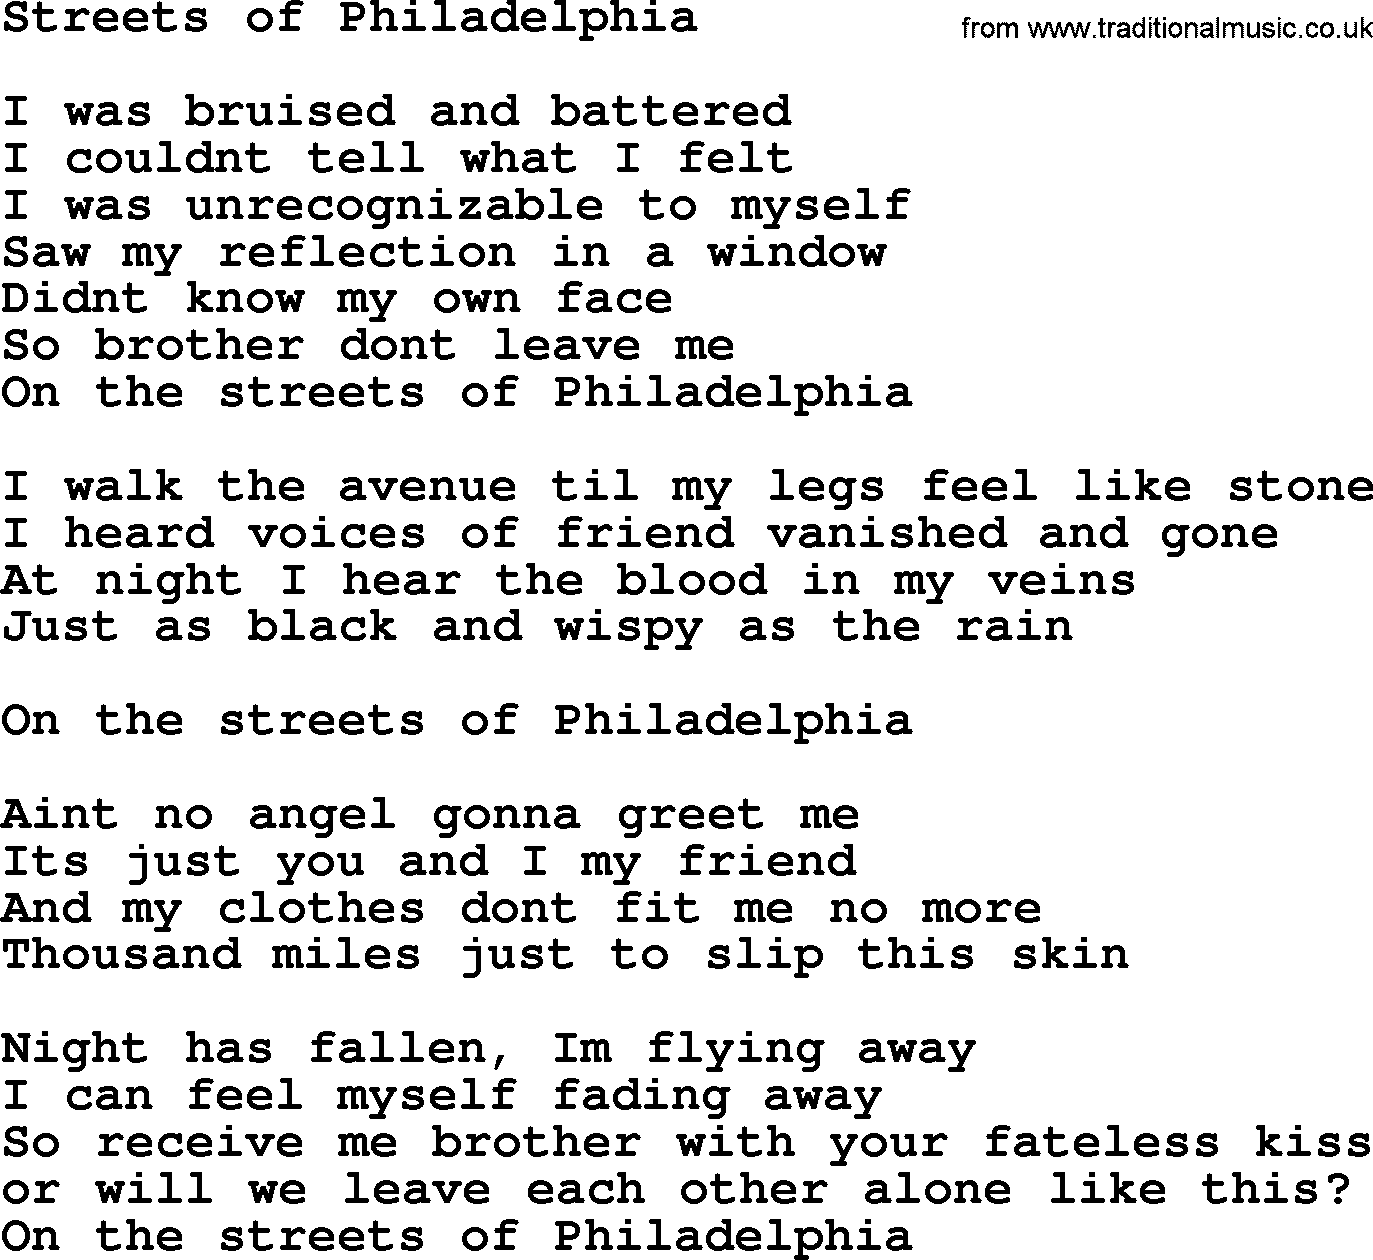 Bruce Springsteen song: Streets Of Philadelphia lyrics